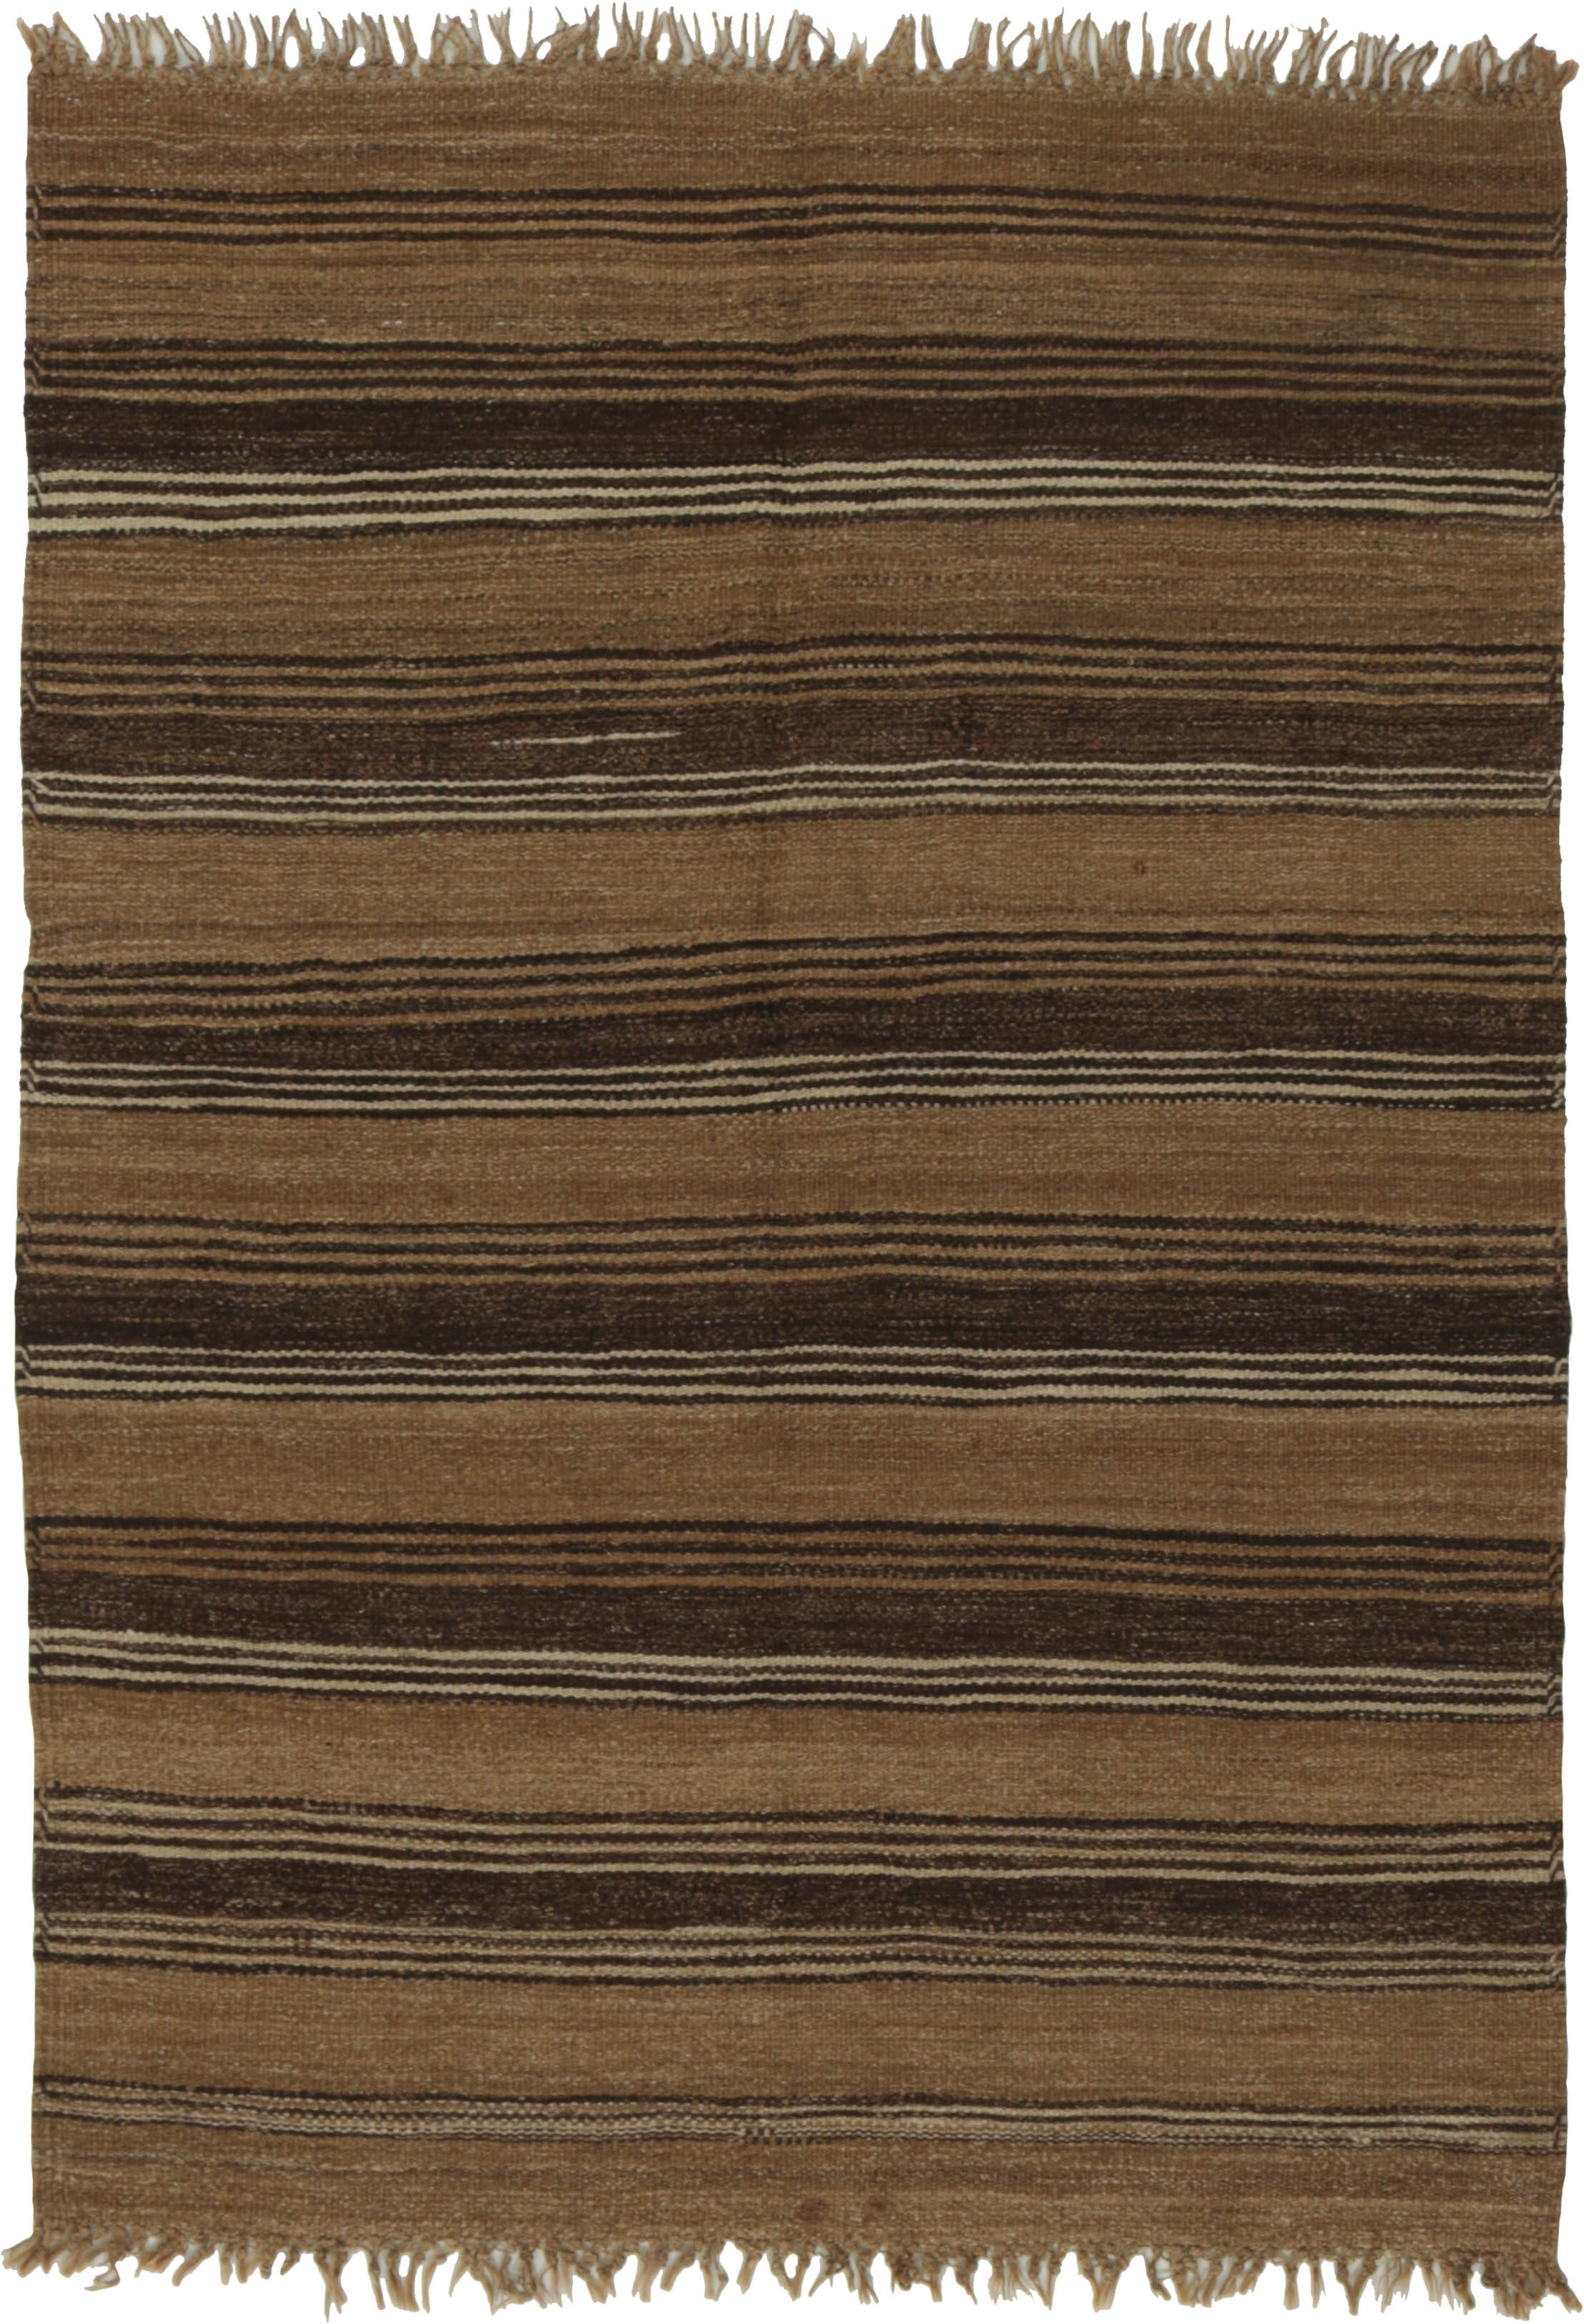 Authentic persian kelim flatweave rug with traditional stripe design in beige